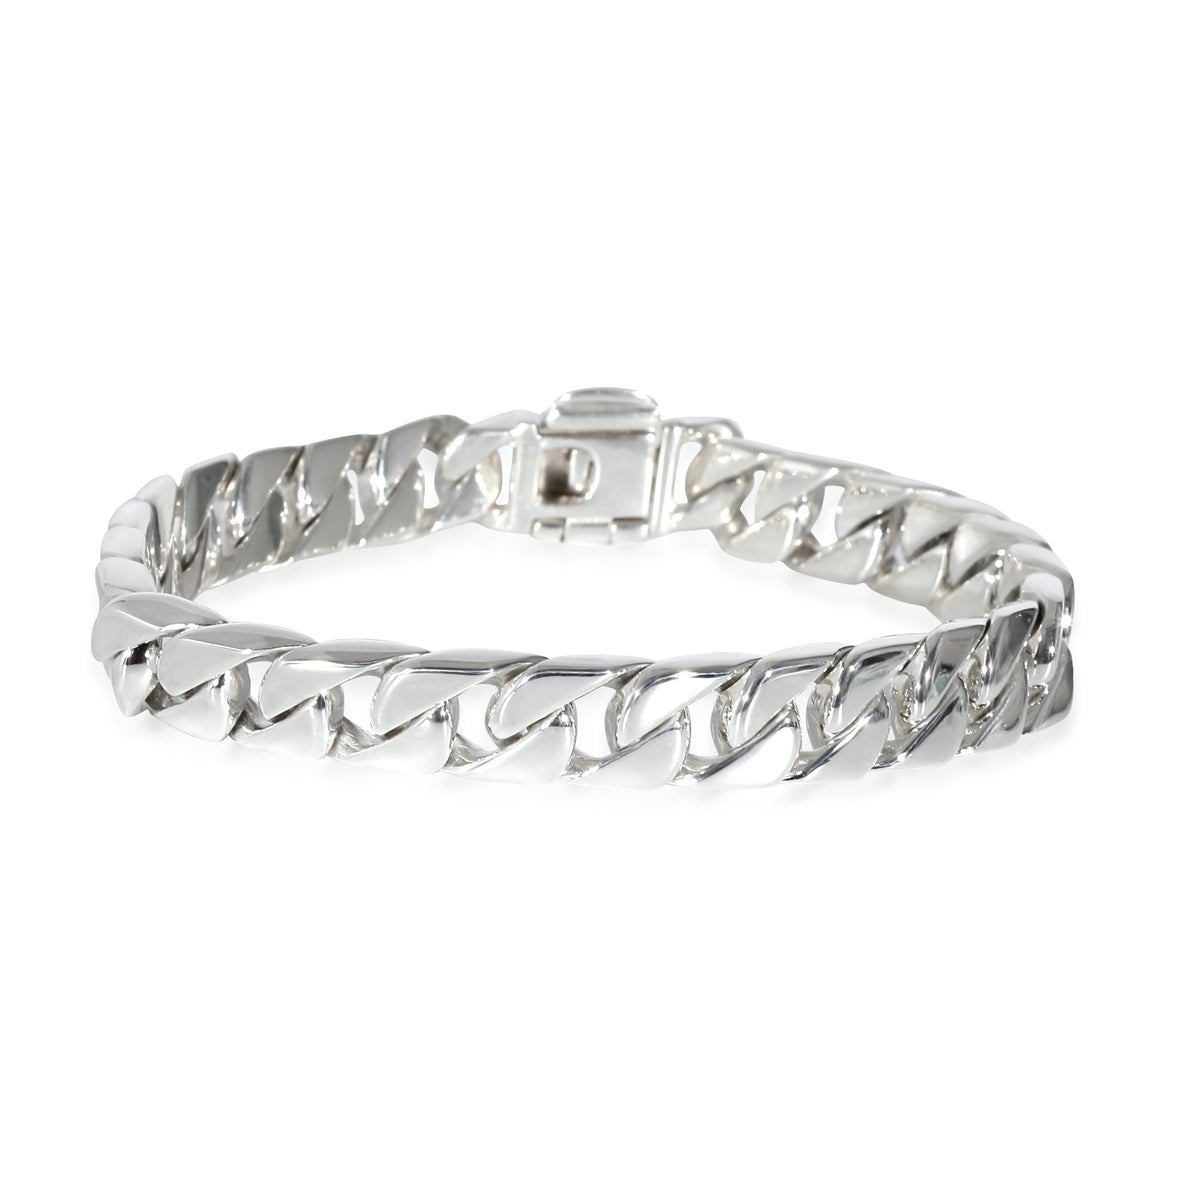 Louis Vuitton - Authenticated Monogram Bracelet - Metal Silver for Women, Very Good Condition